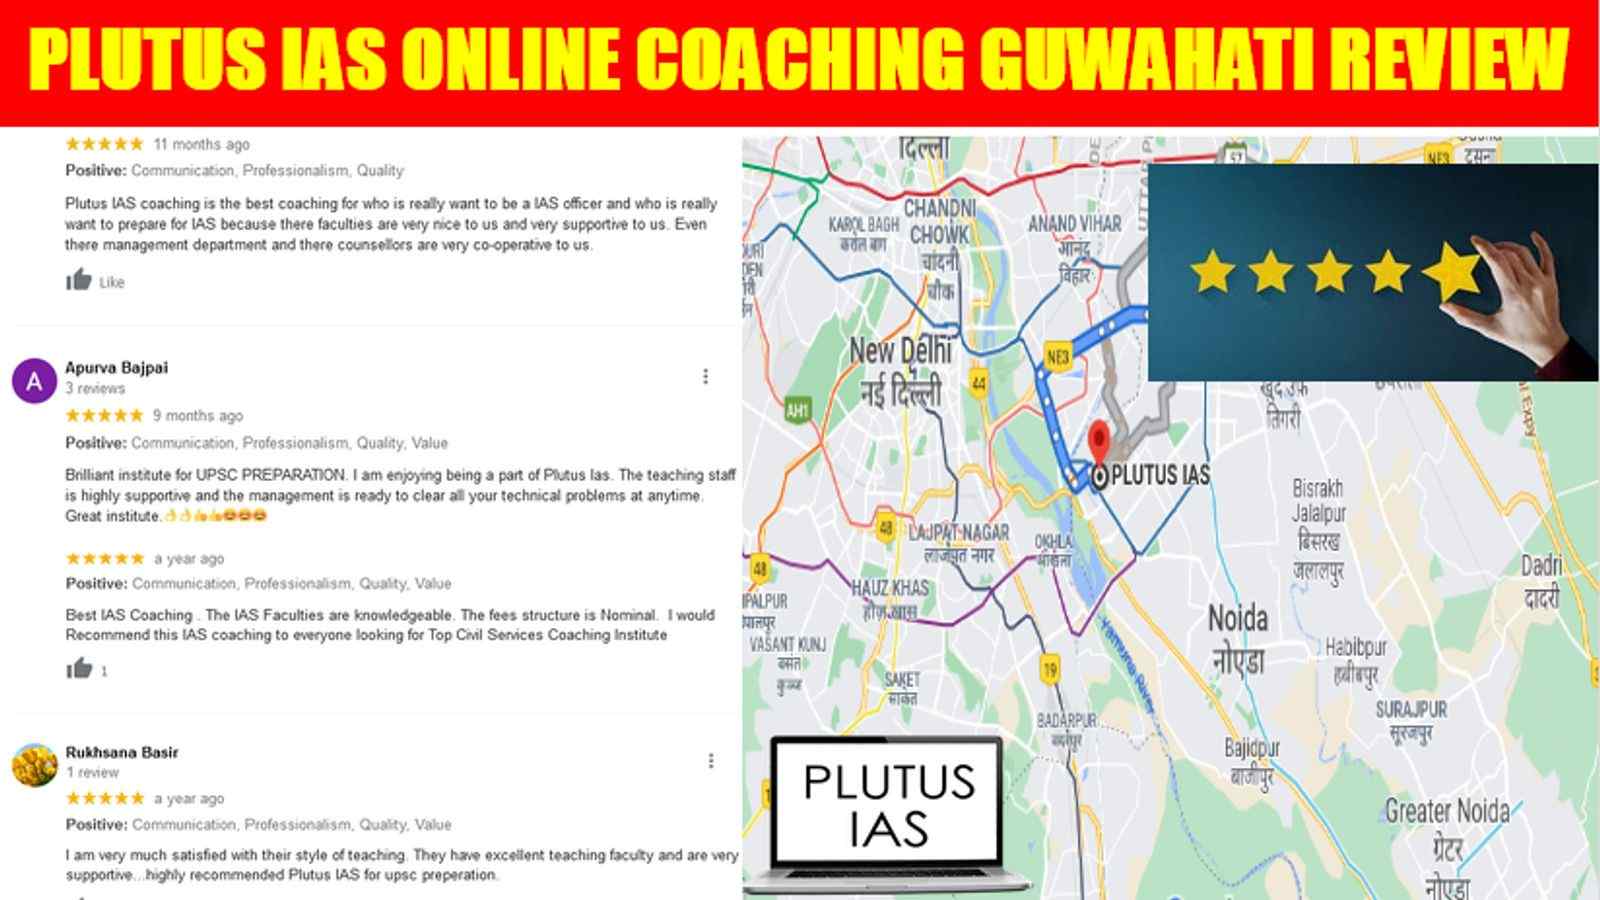 Plutus IAS Online Coaching Guwahati Review